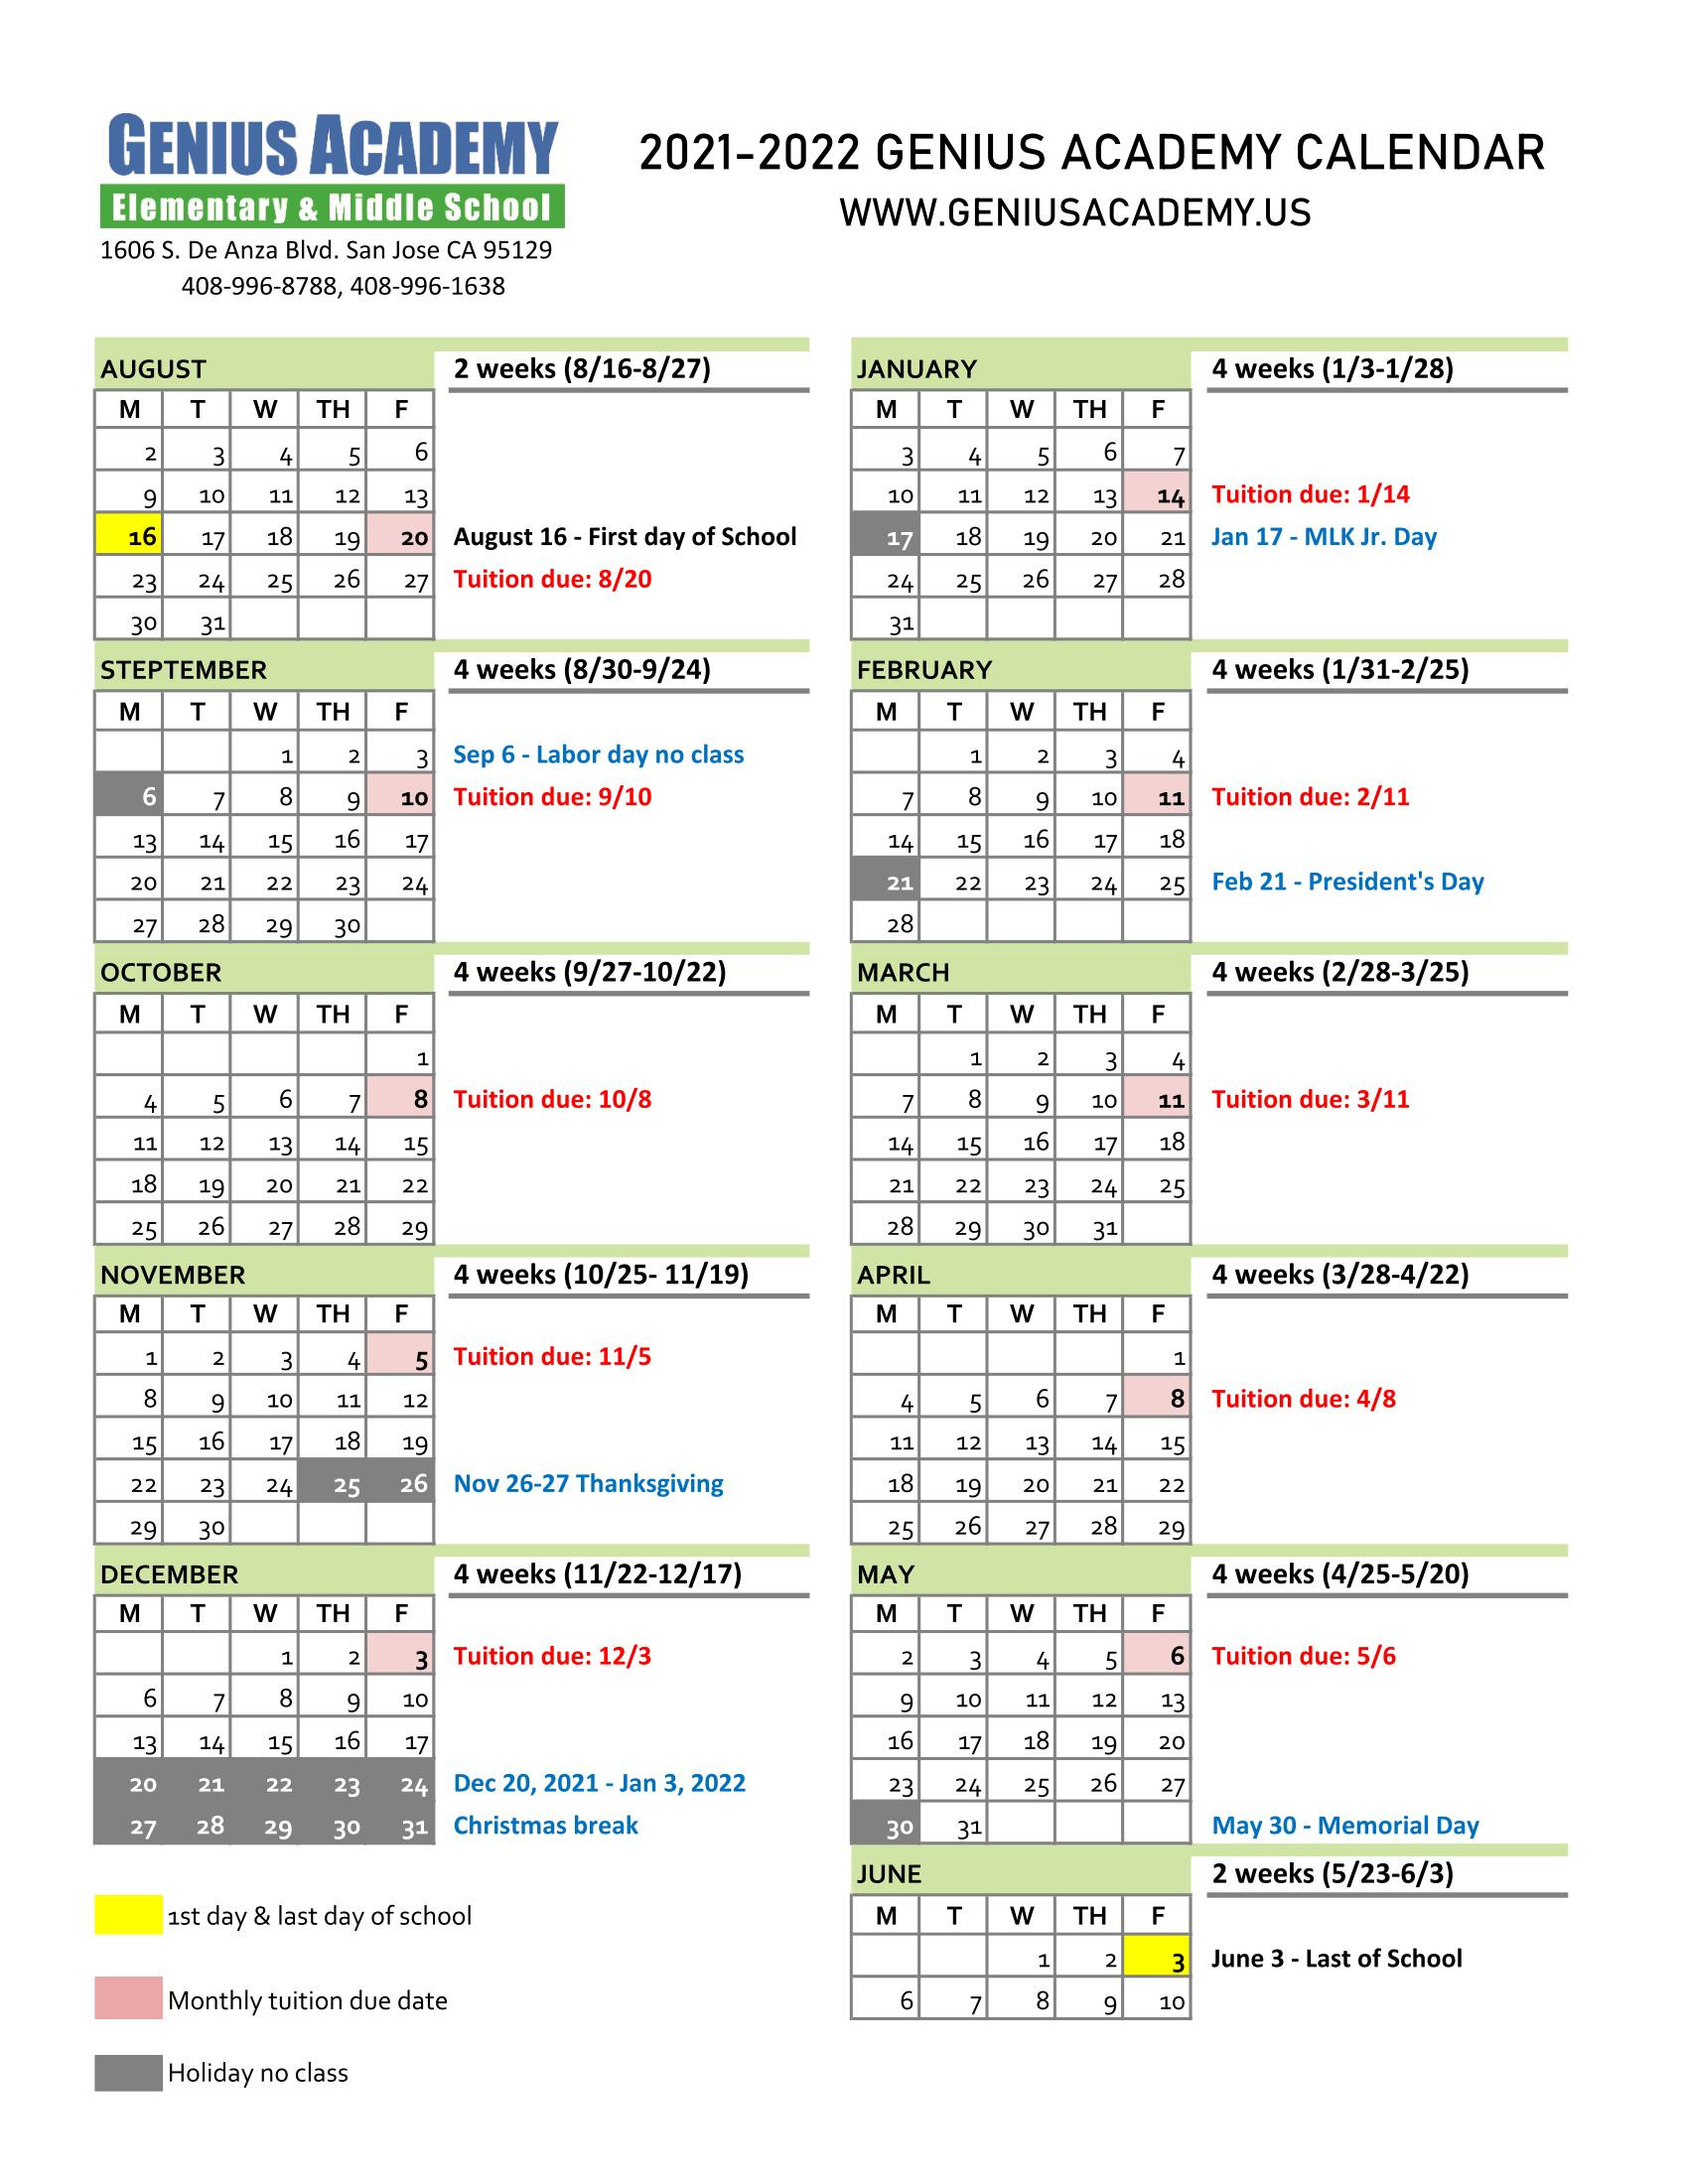 2021-2022 Calendar - Genius Academy  Calendar 2022 California